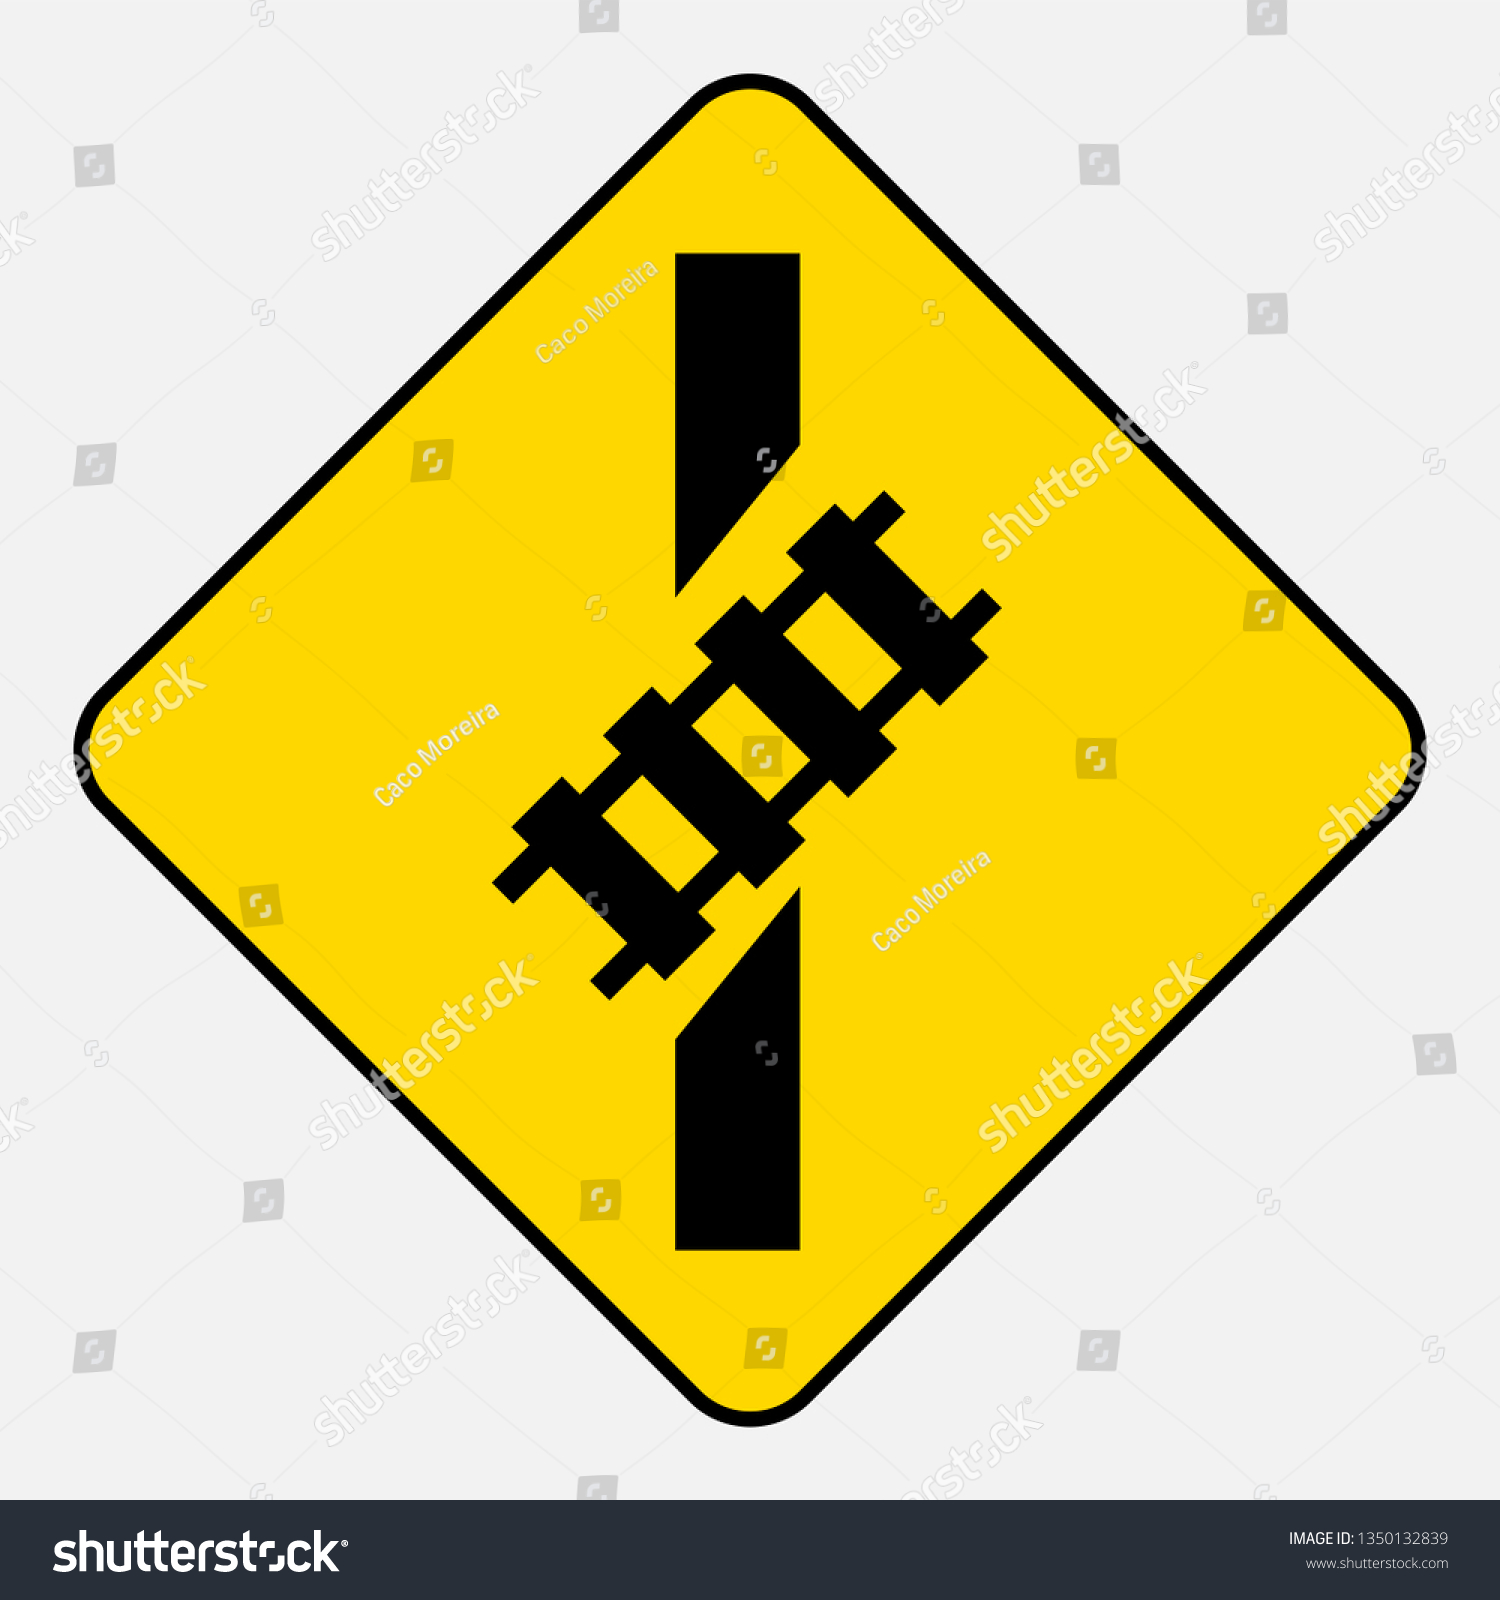 International Traffic Sign Plate Stock Photo 1350132839 | Shutterstock